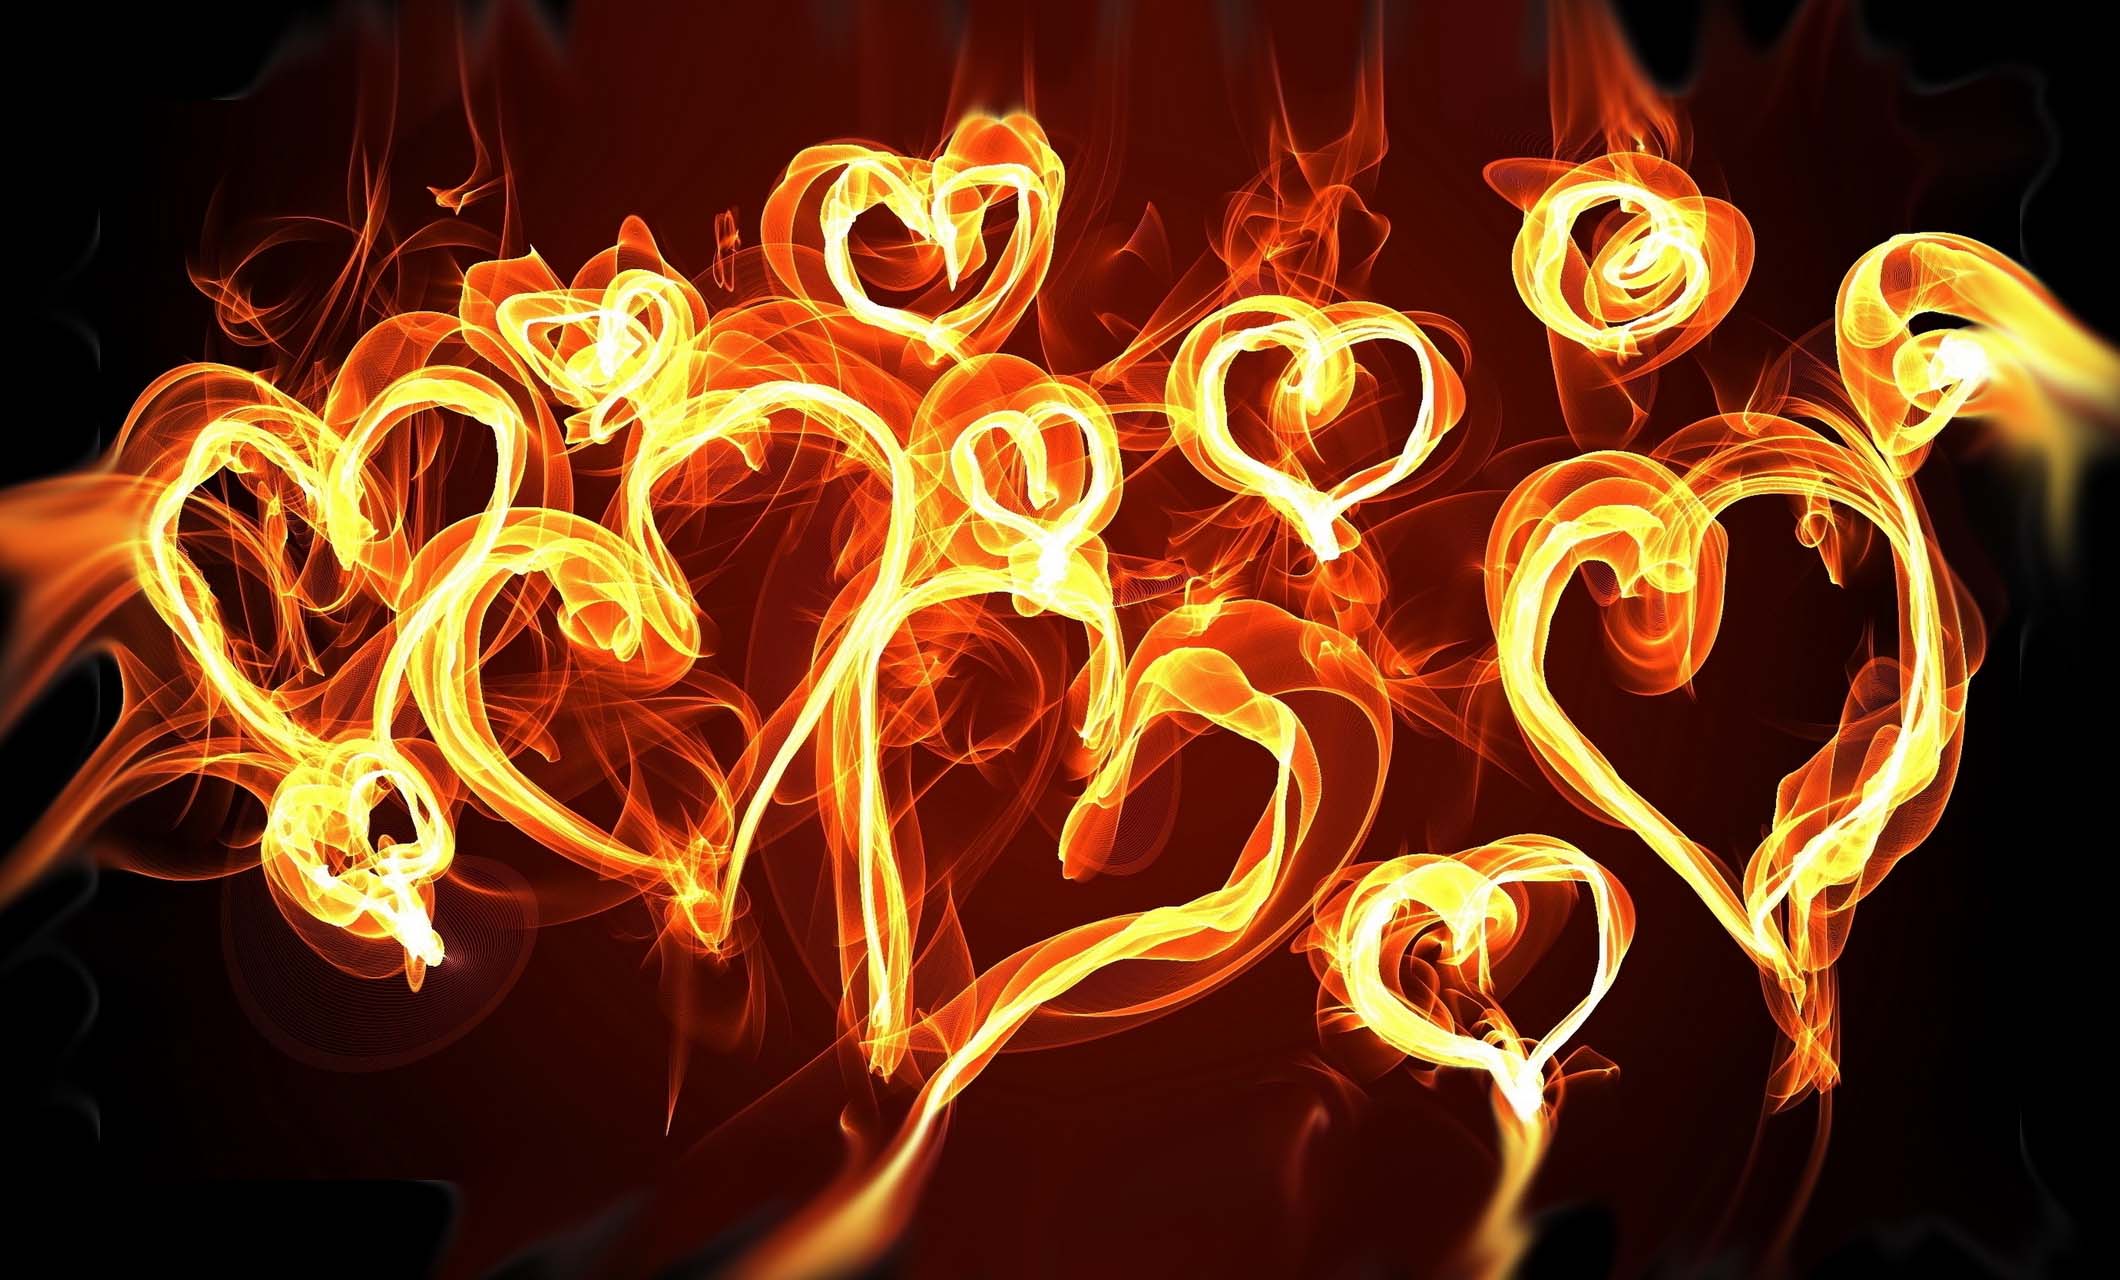 Сердце на весь экран. Огненное сердце. Пламенное сердце. Горящее сердце. Сердце в огне.